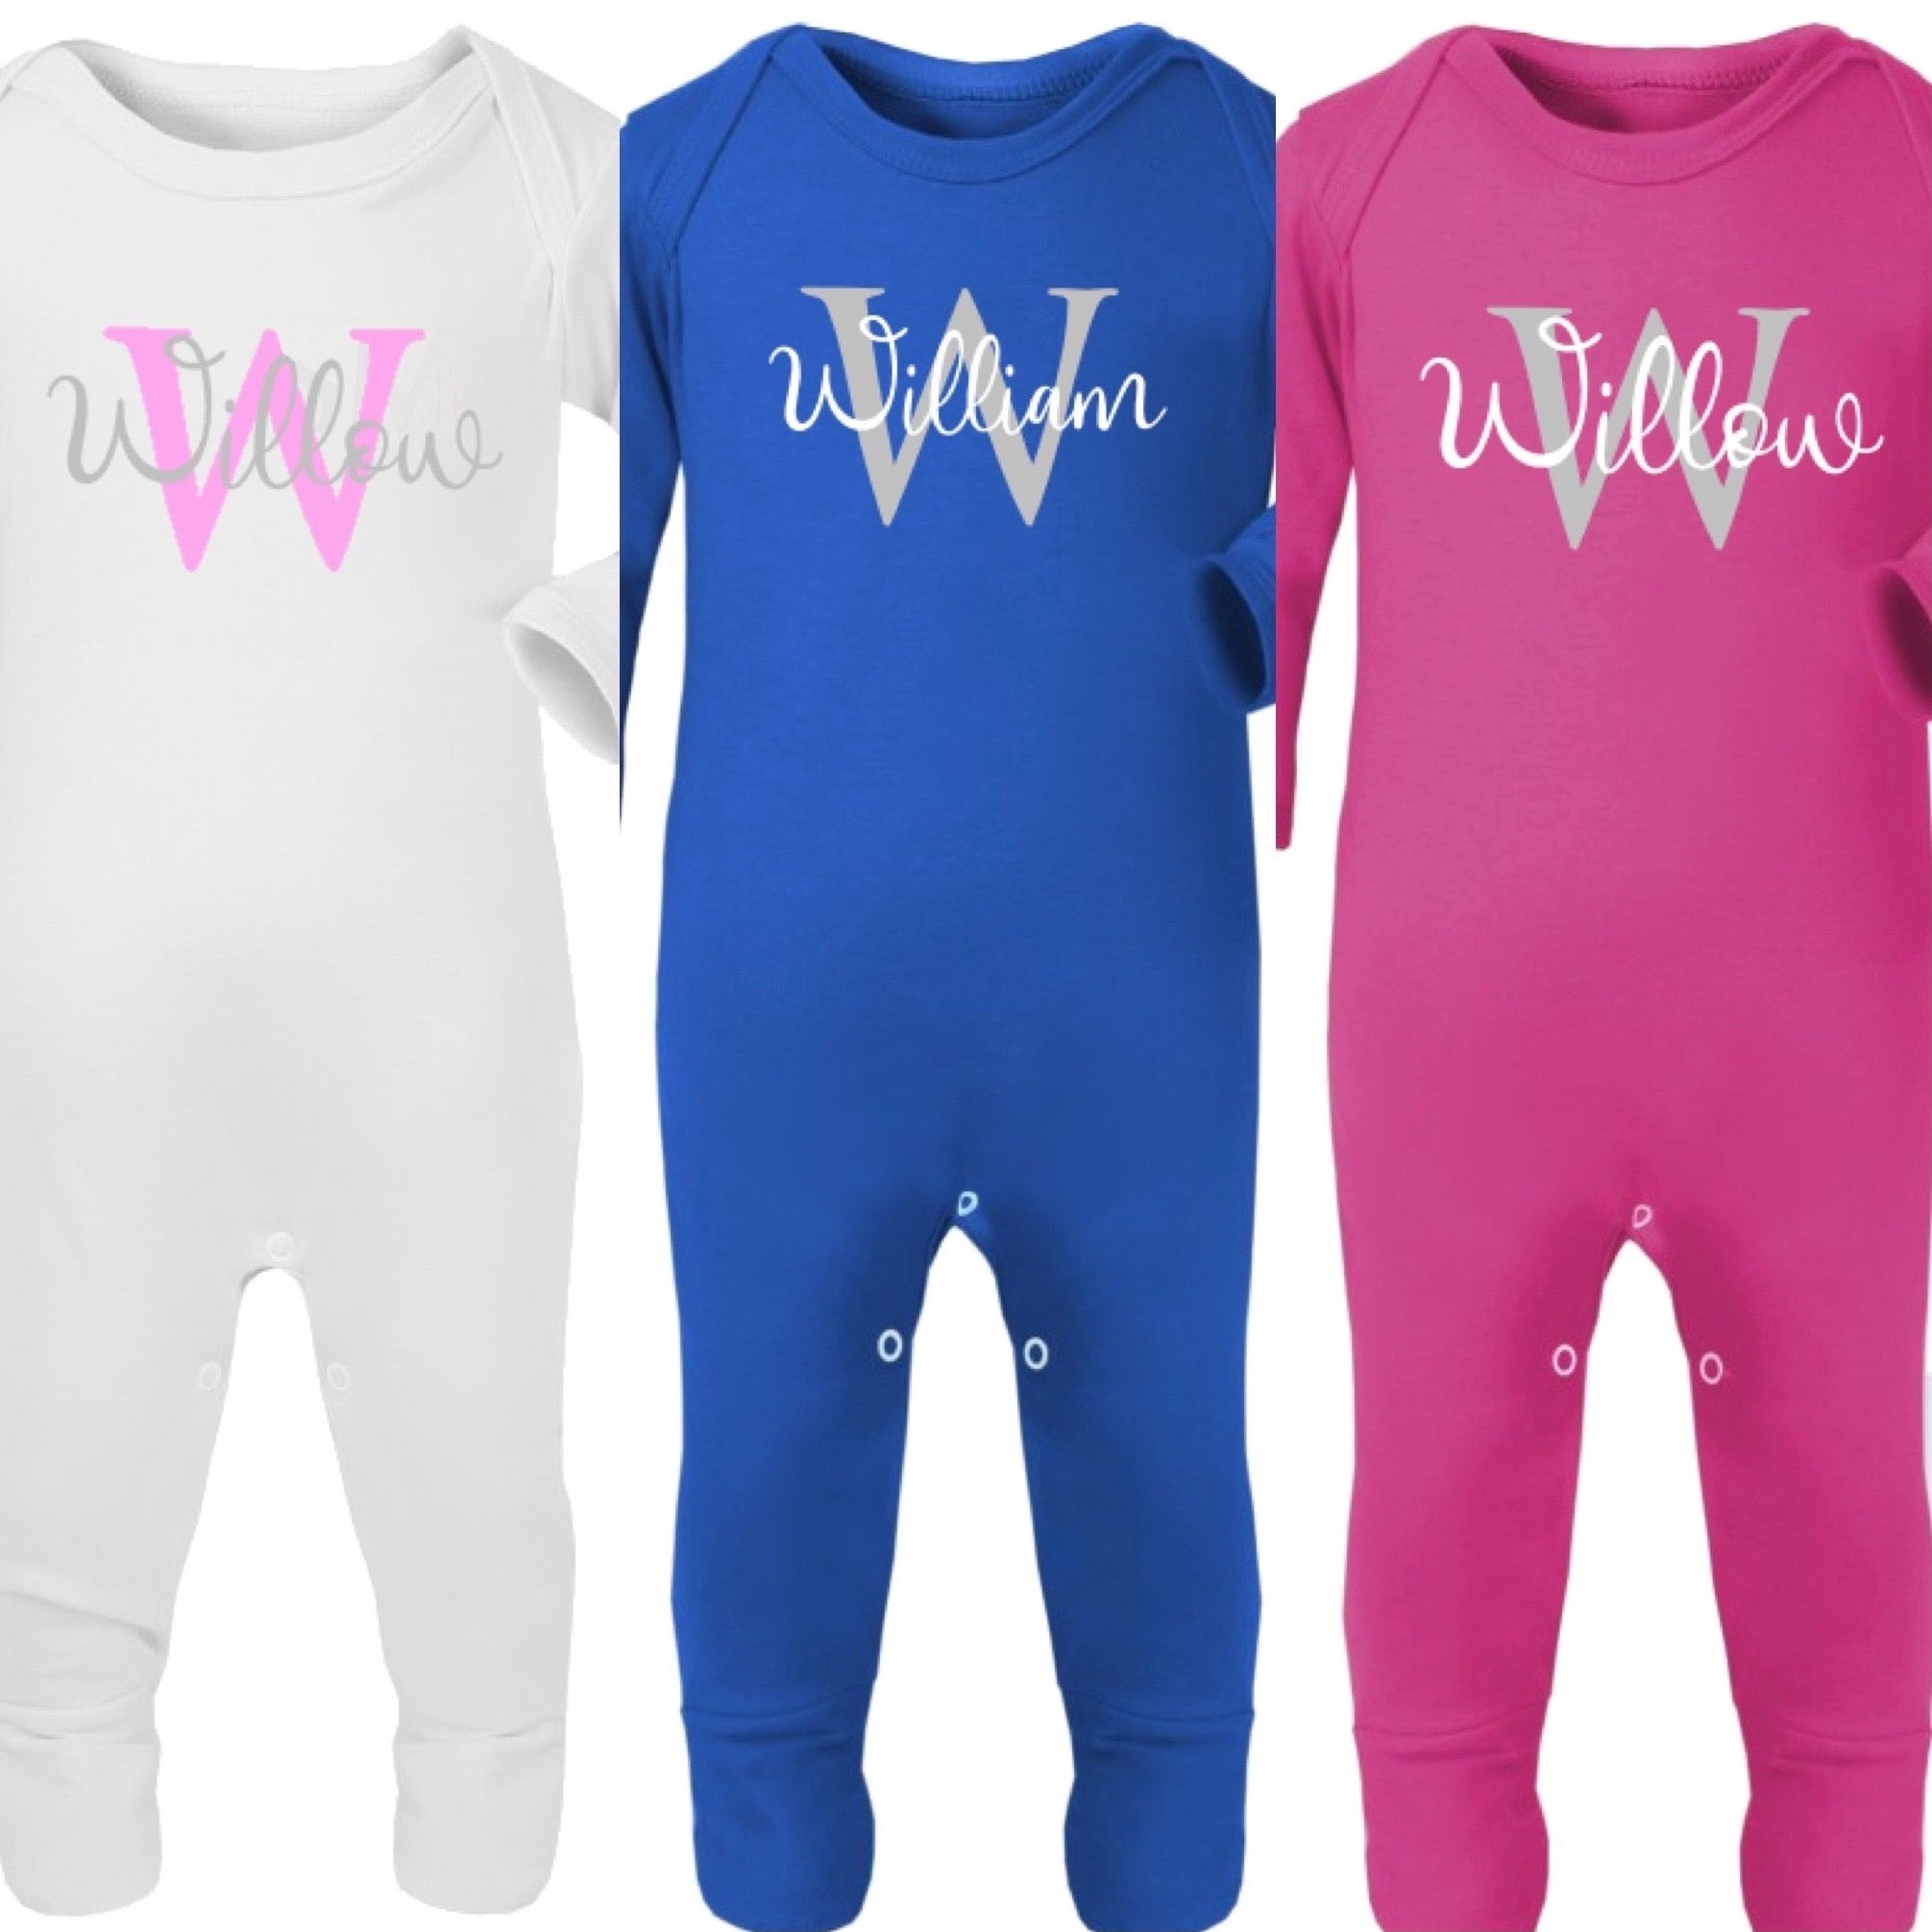 Personalised Sleepsuit Baby Big Letter Design